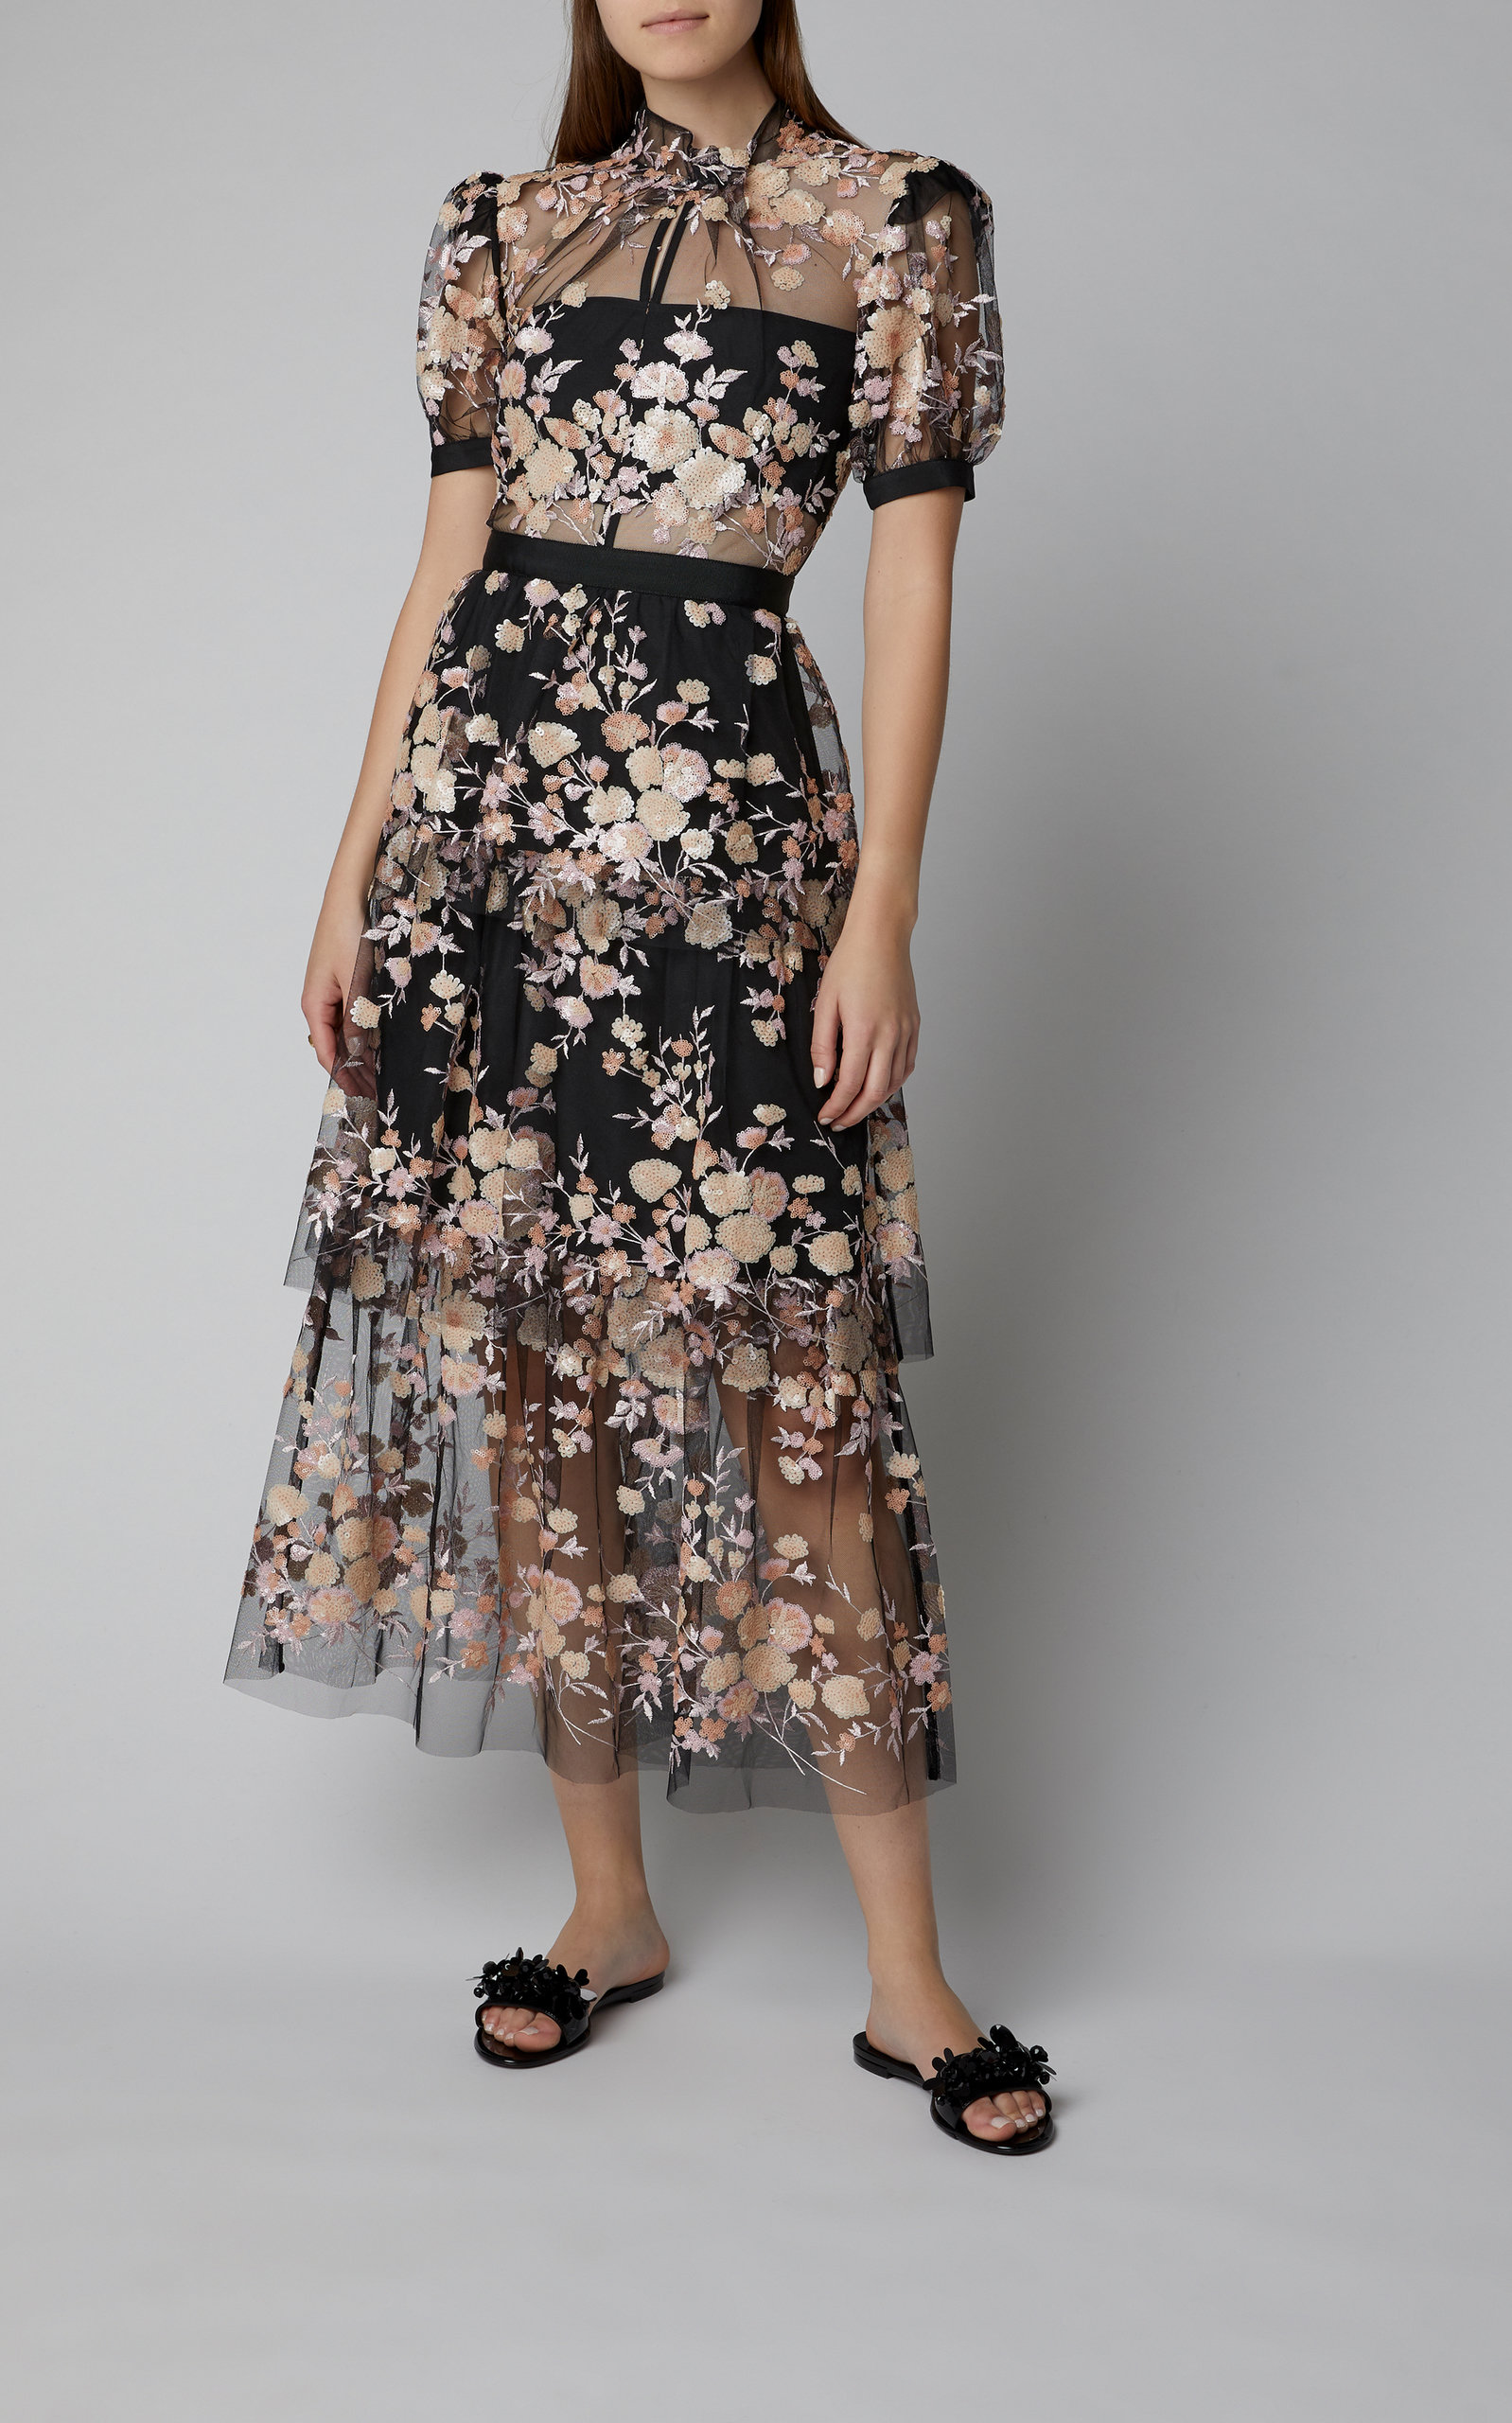 michael kors floral embroidered mesh dress